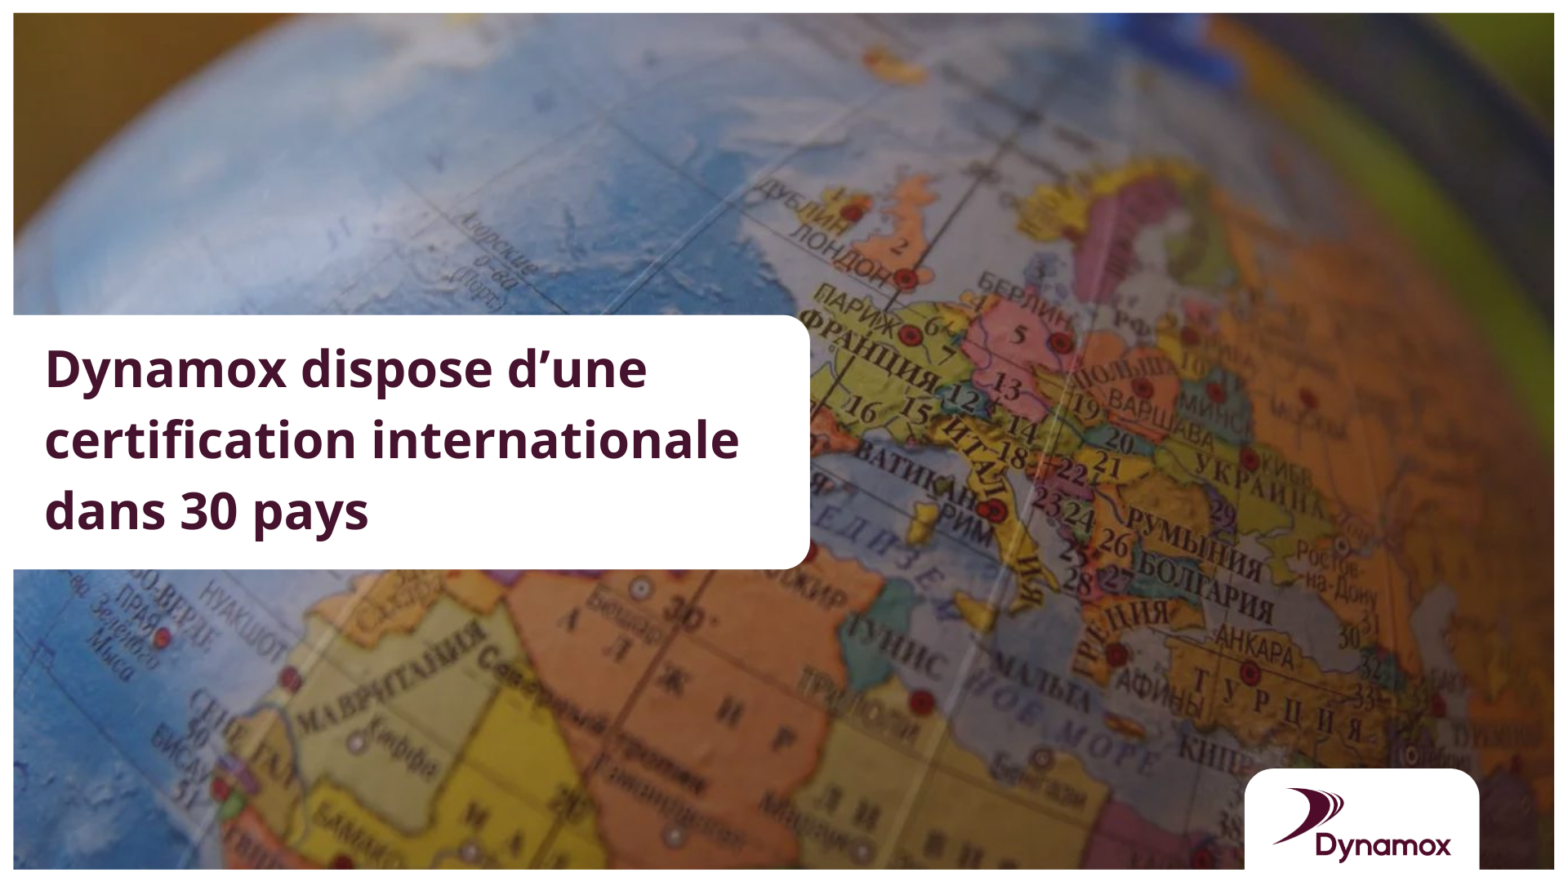 Dynamox dispose d’une certification internationale dans 30 pays